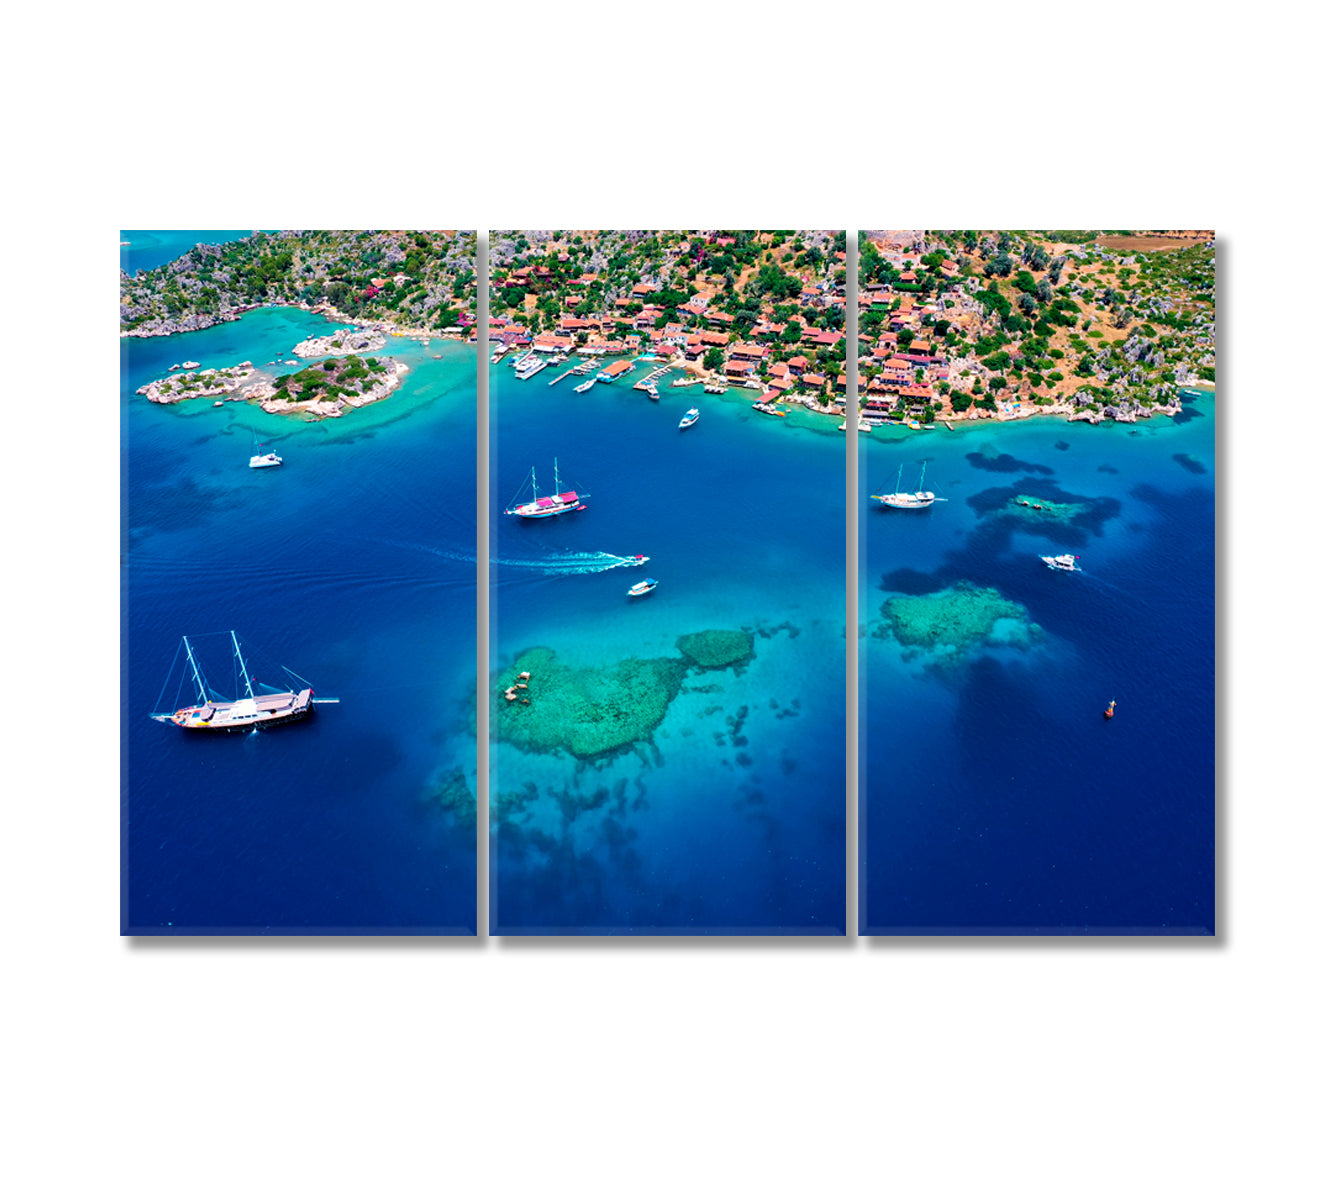 Demre Kekova Submerged City Antalya Turkey Canvas Print-Canvas Print-CetArt-3 Panels-36x24 inches-CetArt